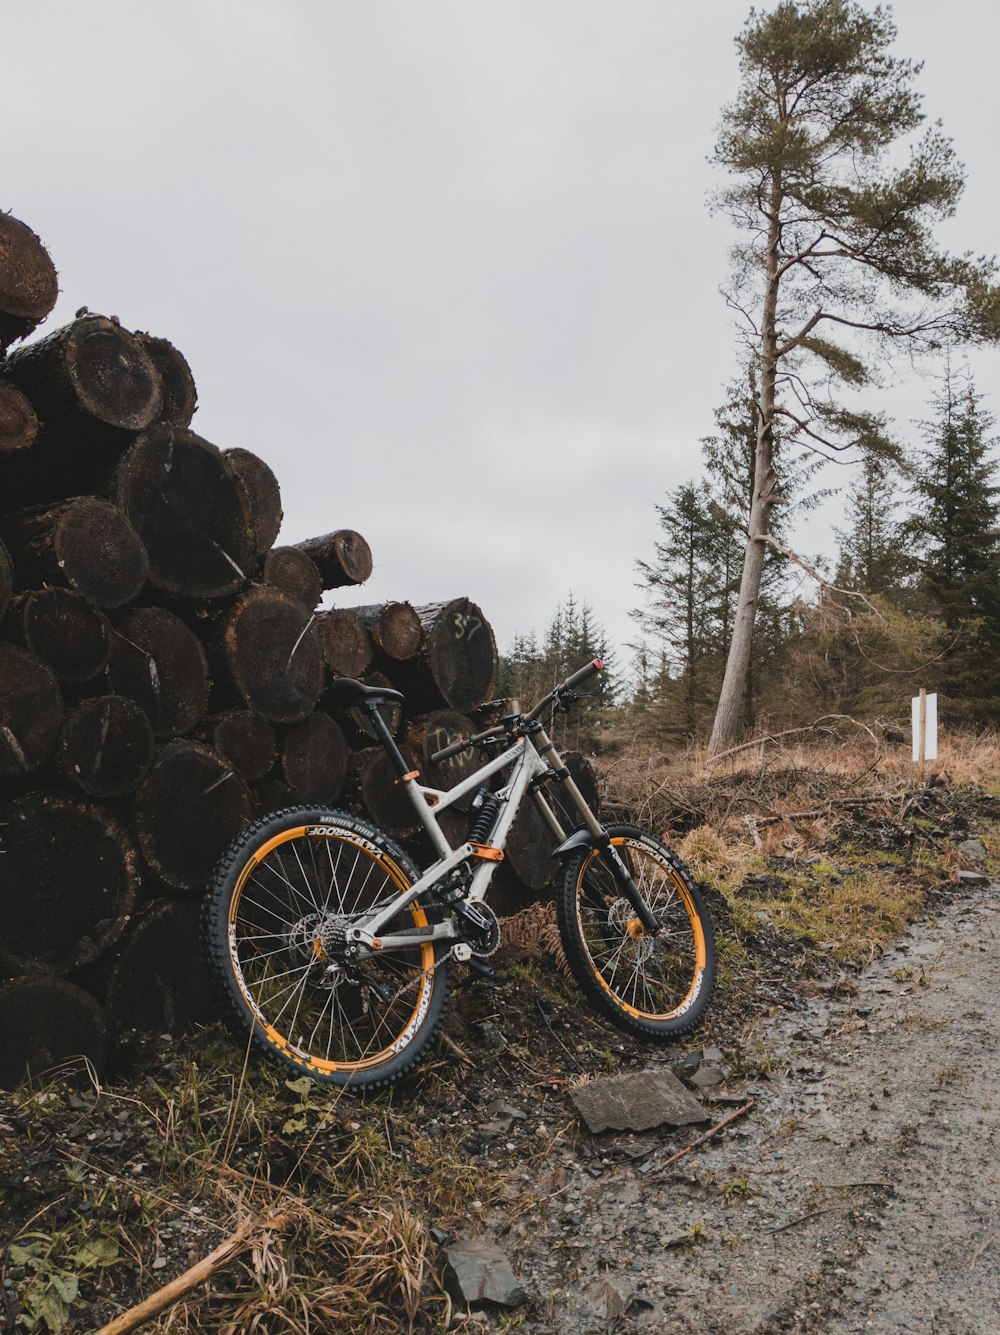 black and white mountain bike beside brown wood logs